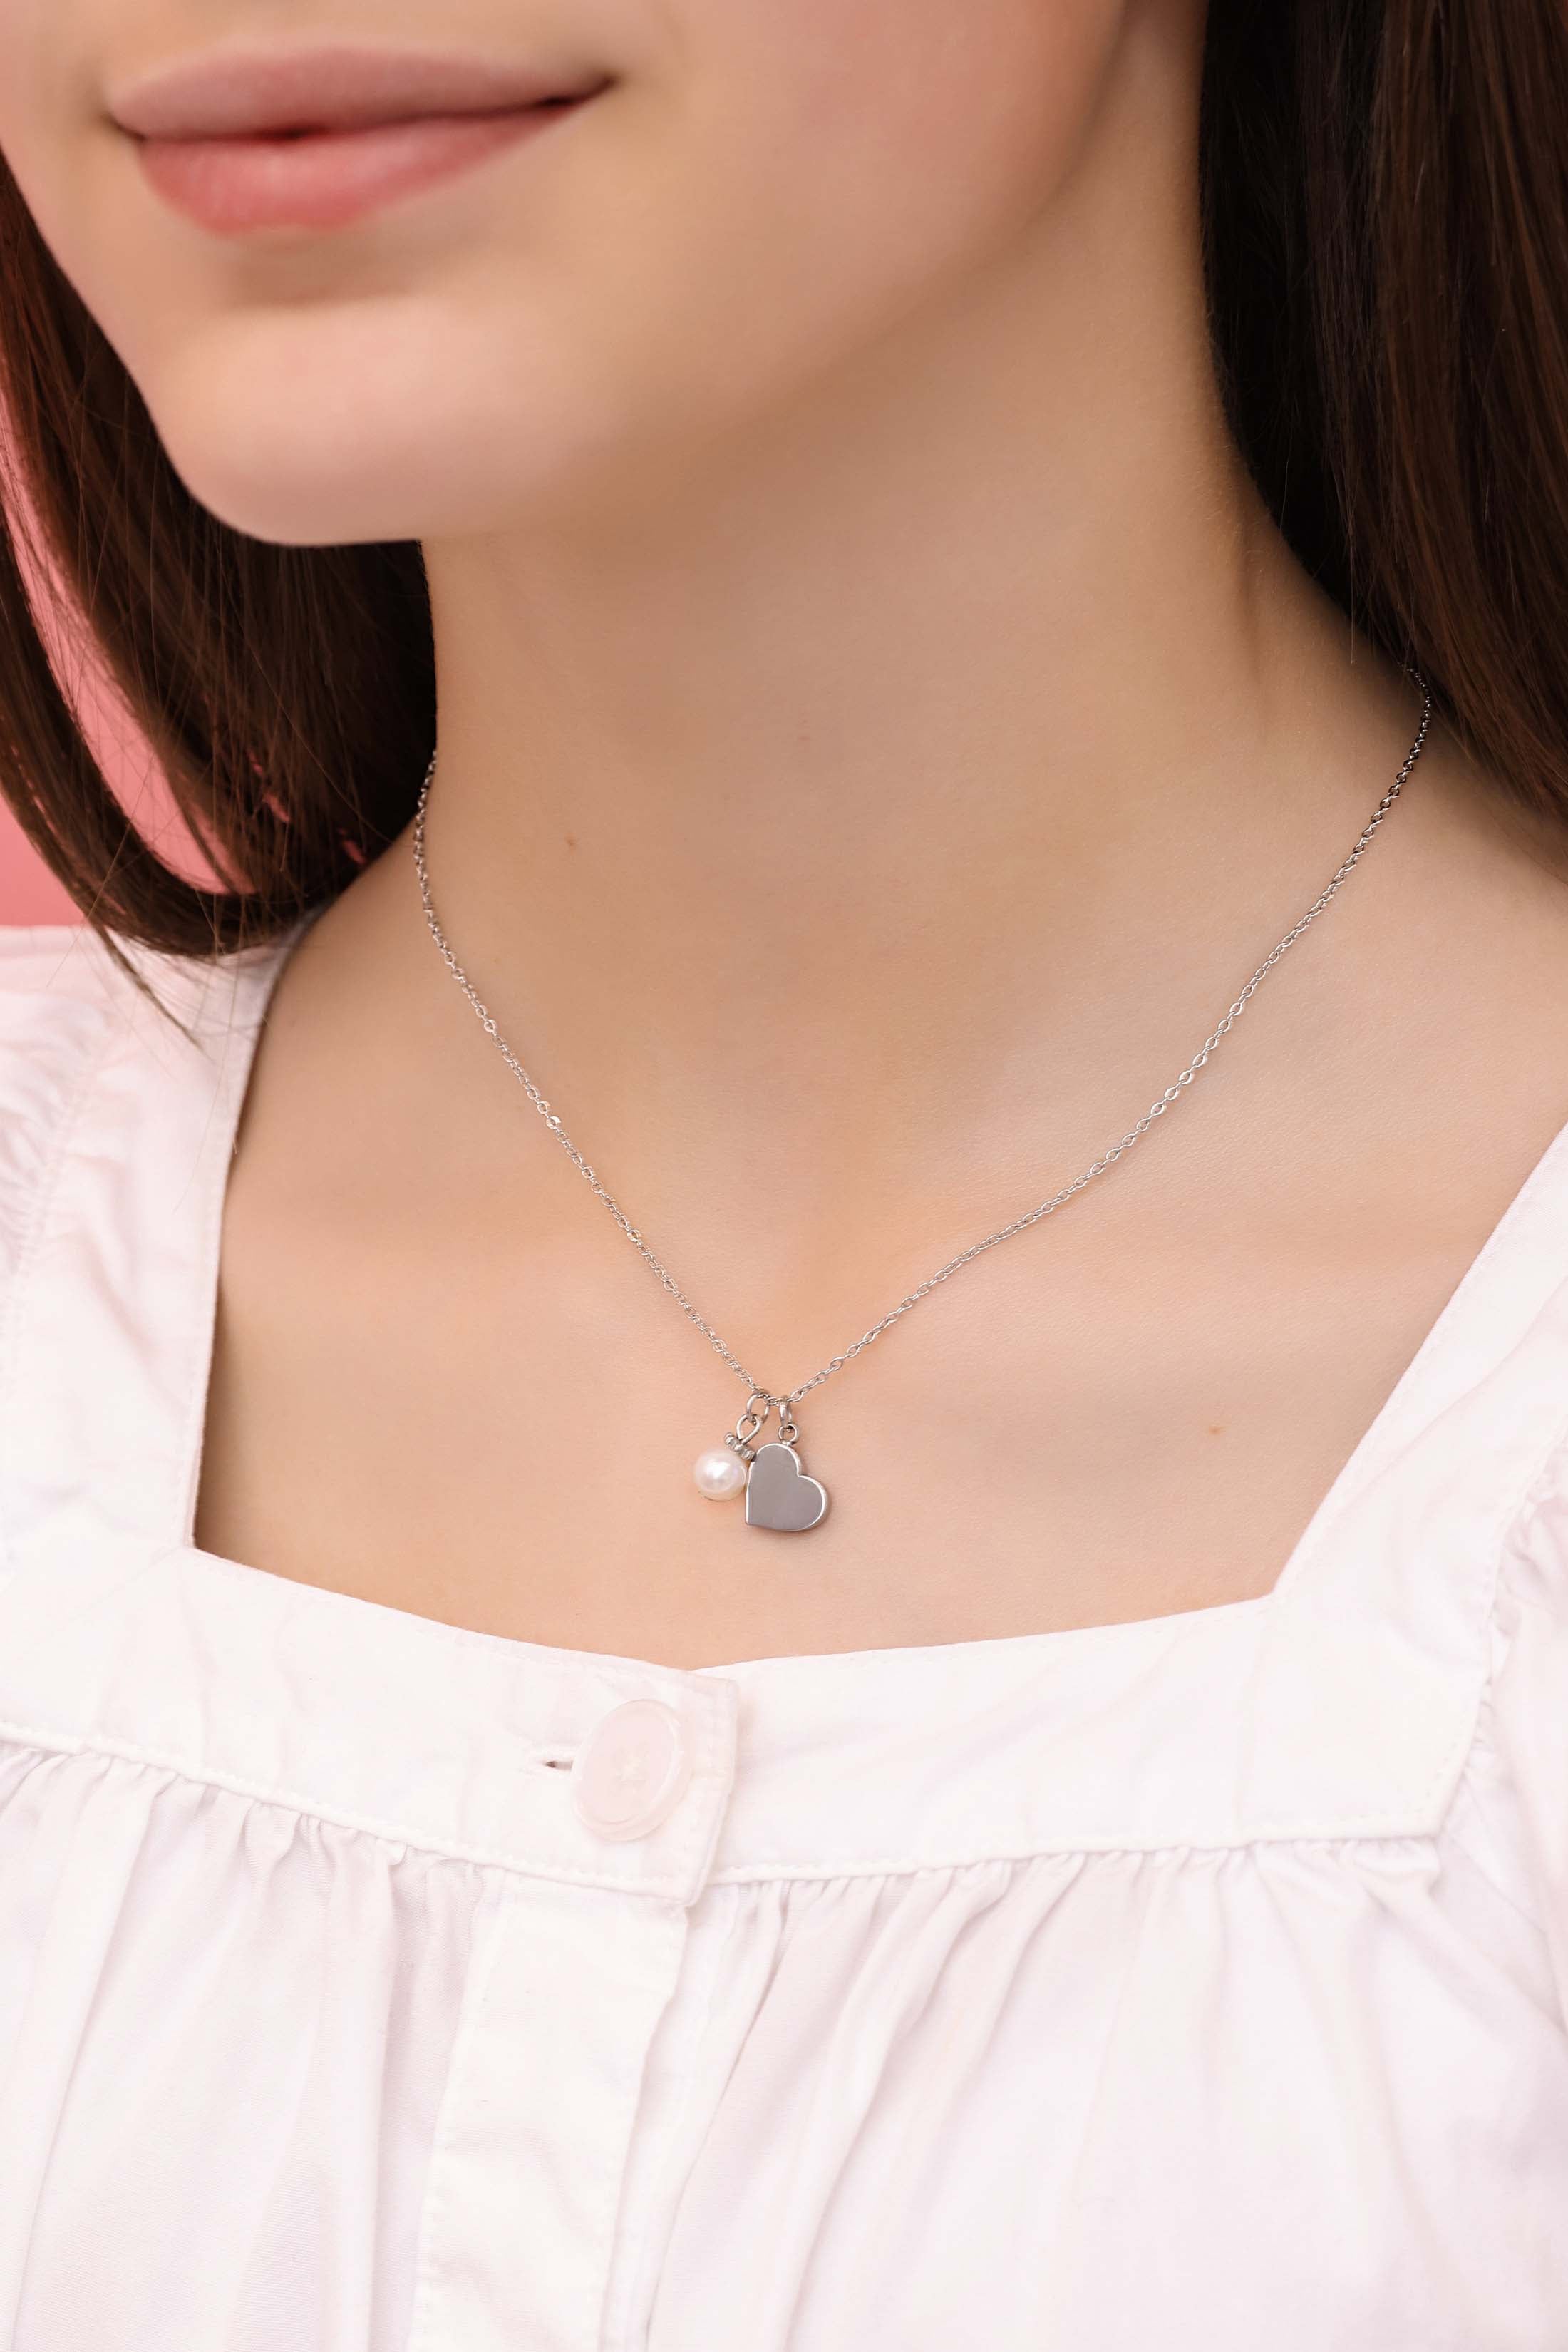 Qalbi Perla Engravable Silver Necklace